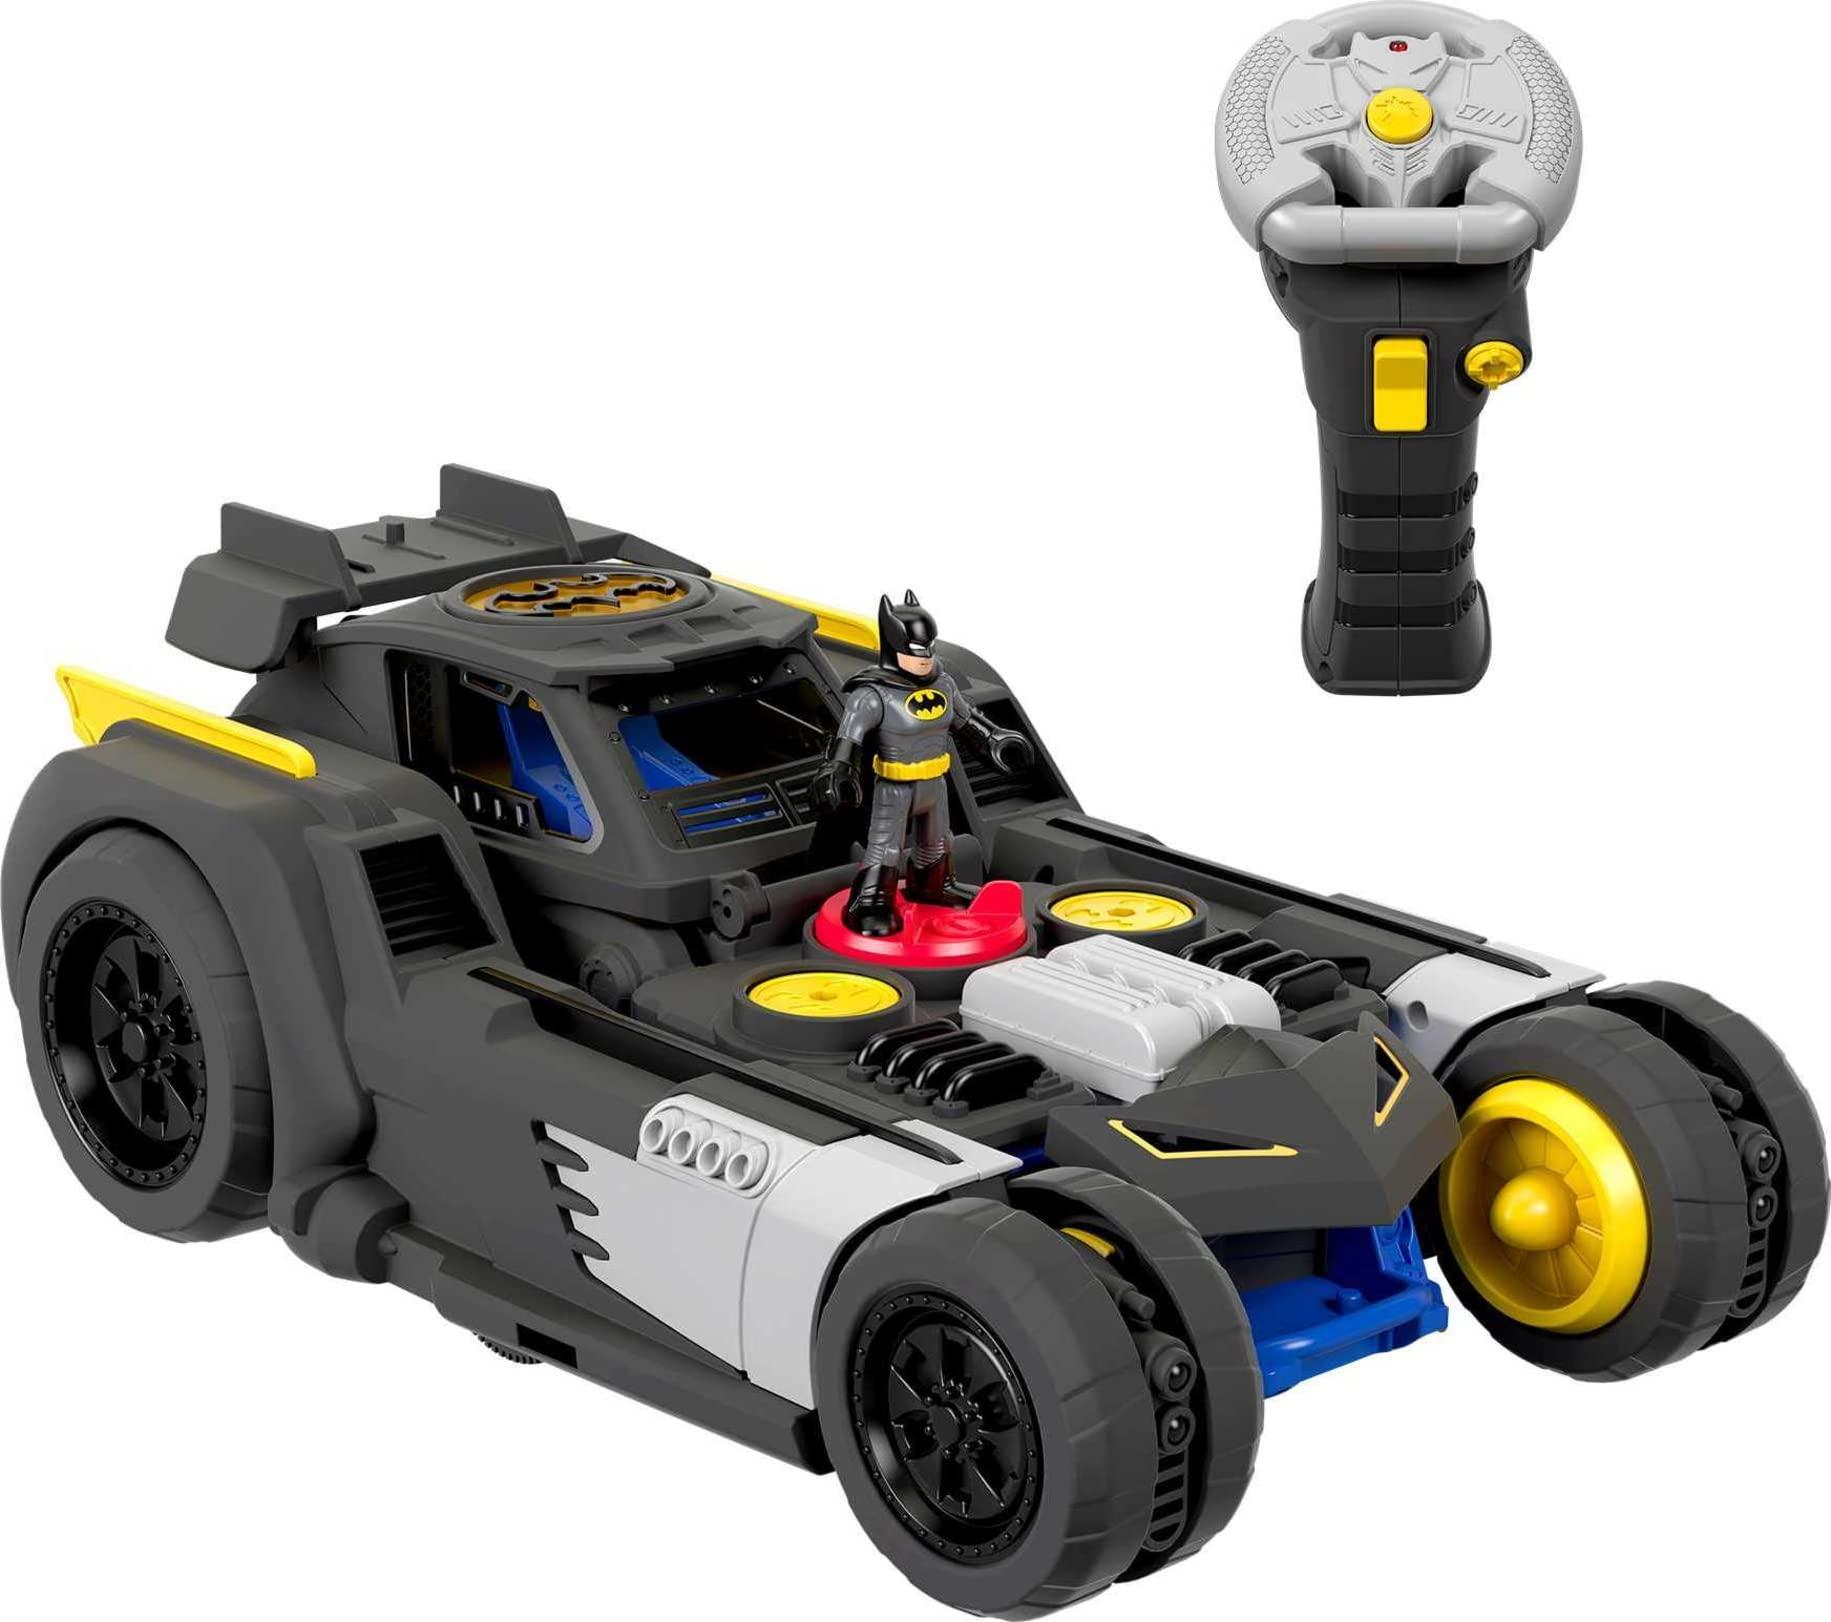 Batman Rc Batmobile: Purchasing Tips for the Affordable Batman RC Batmobile